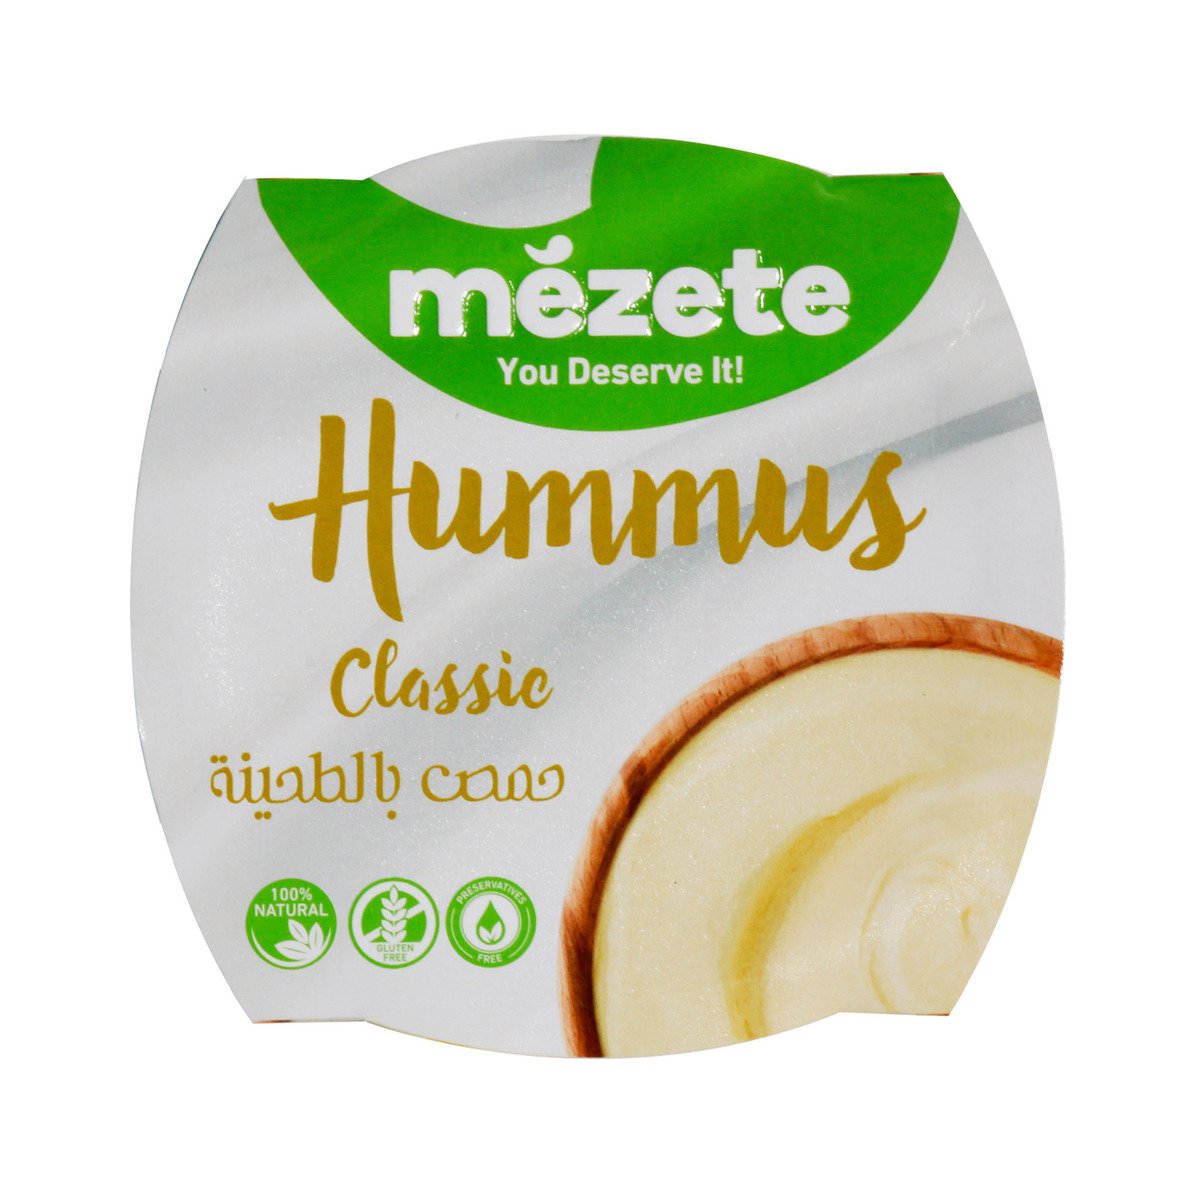 Mezete Hummus Classic 215g